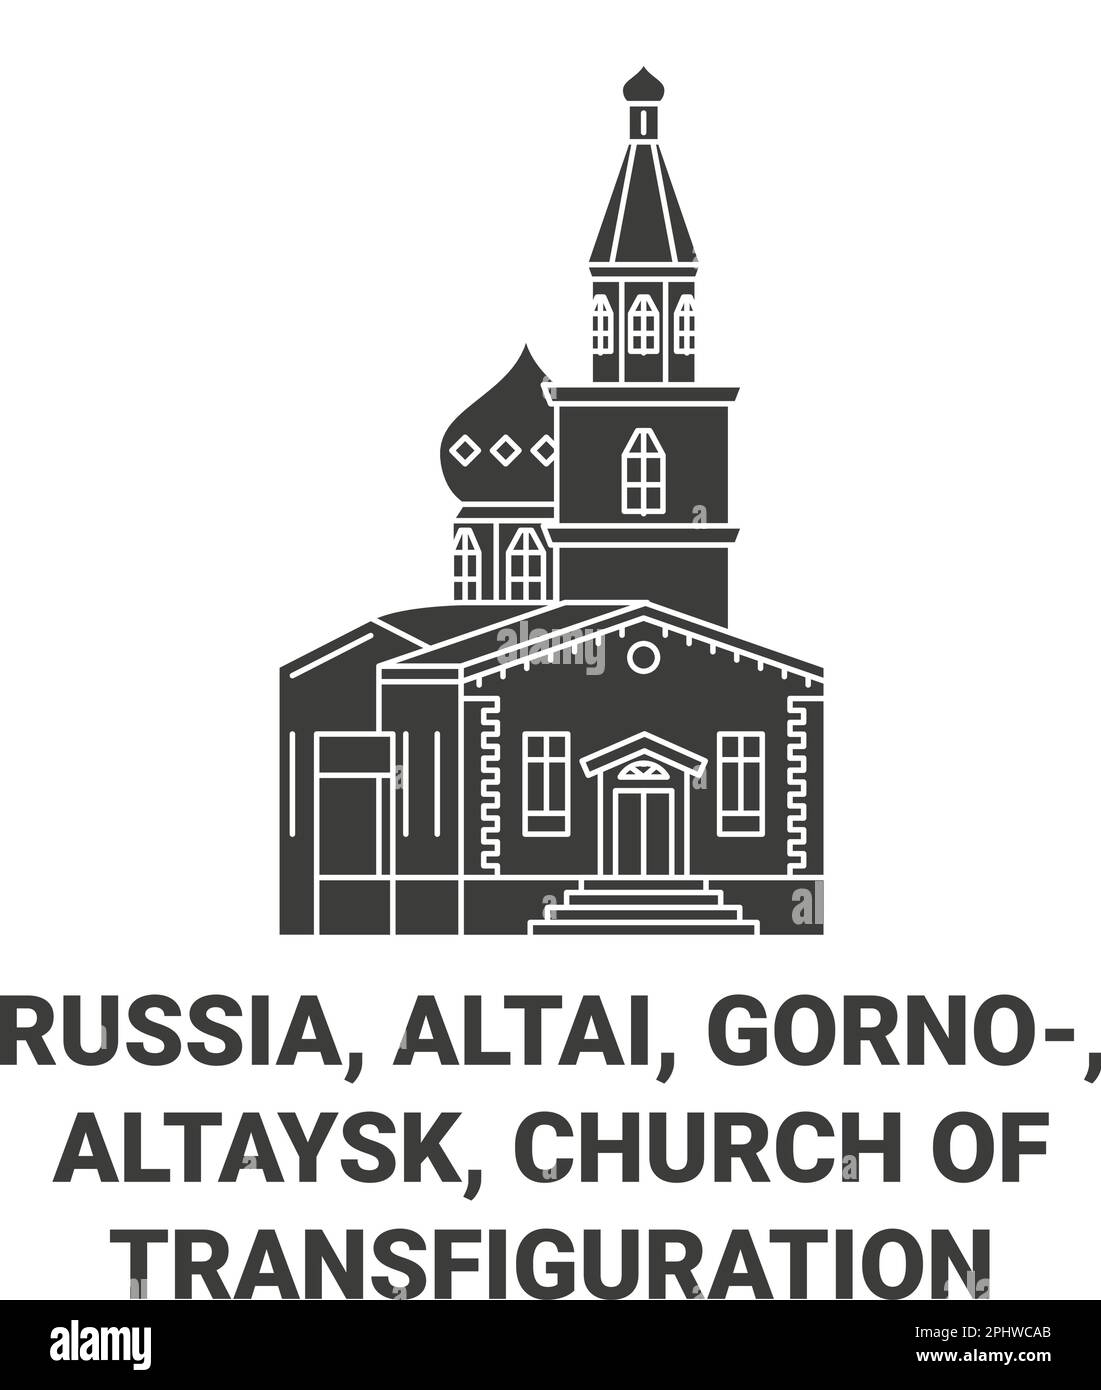 Russia, Altai, Gorno, Altaysk, Church Of Transfiguration travel landmark vector illustration Stock Vector